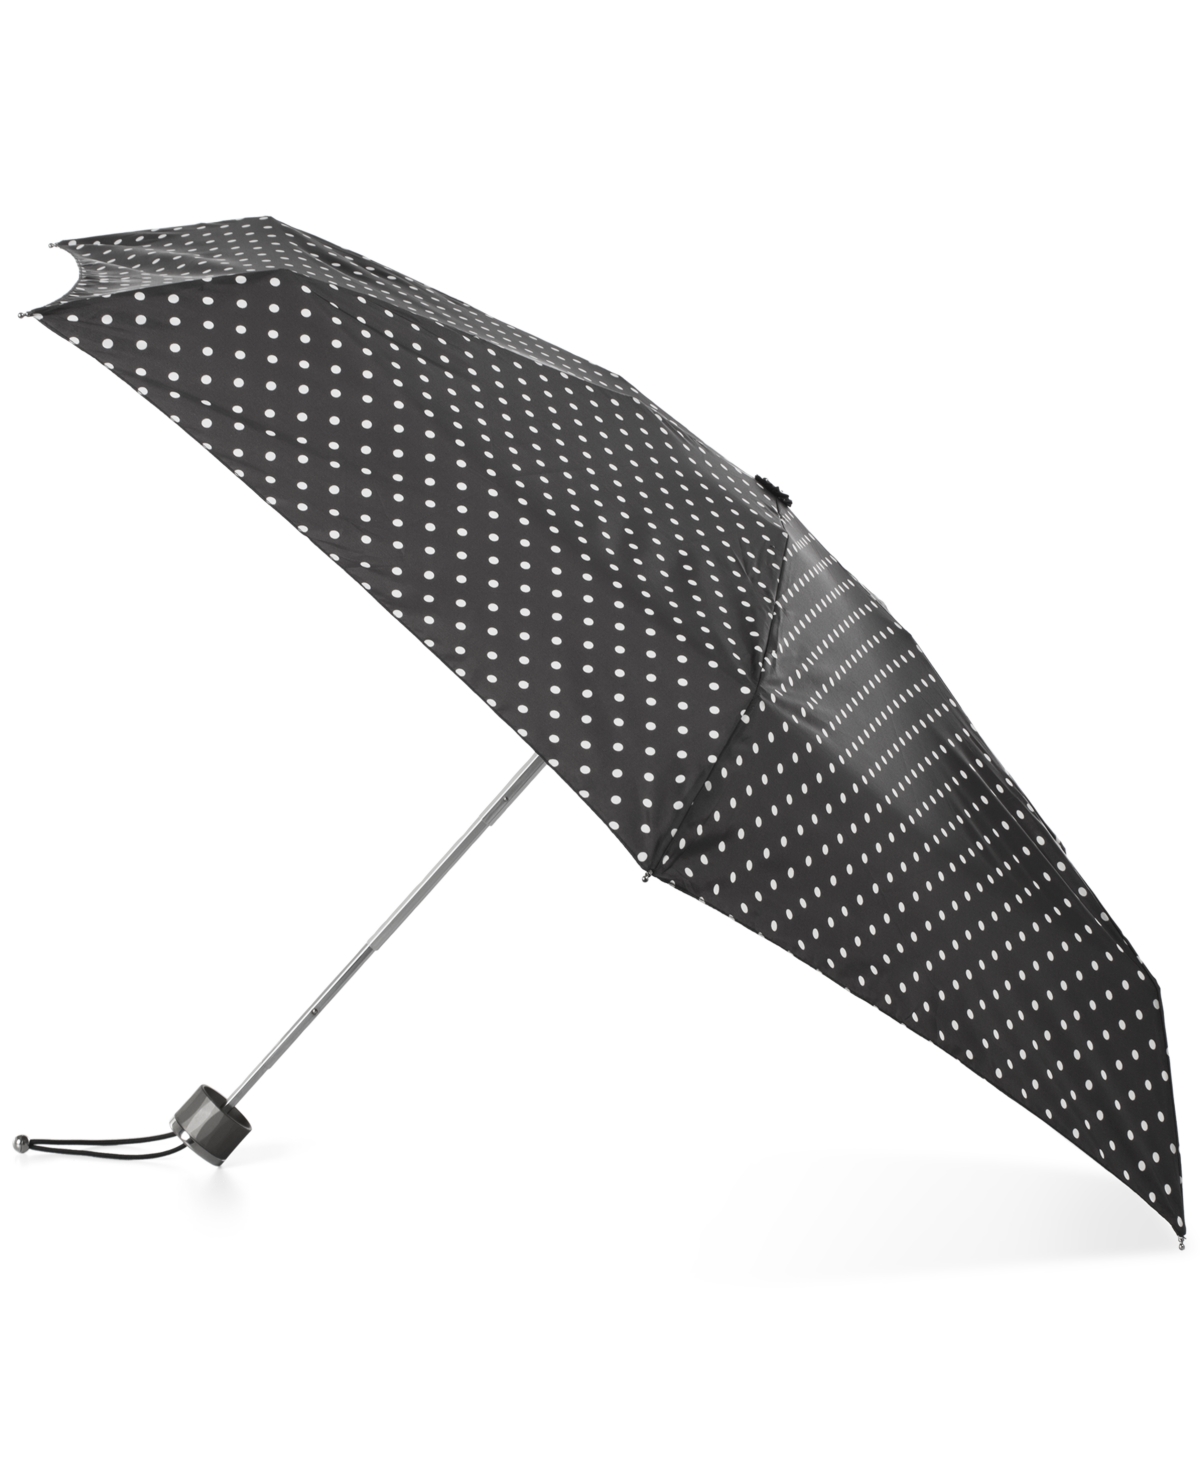 Titan Mini Umbrella - Black/white